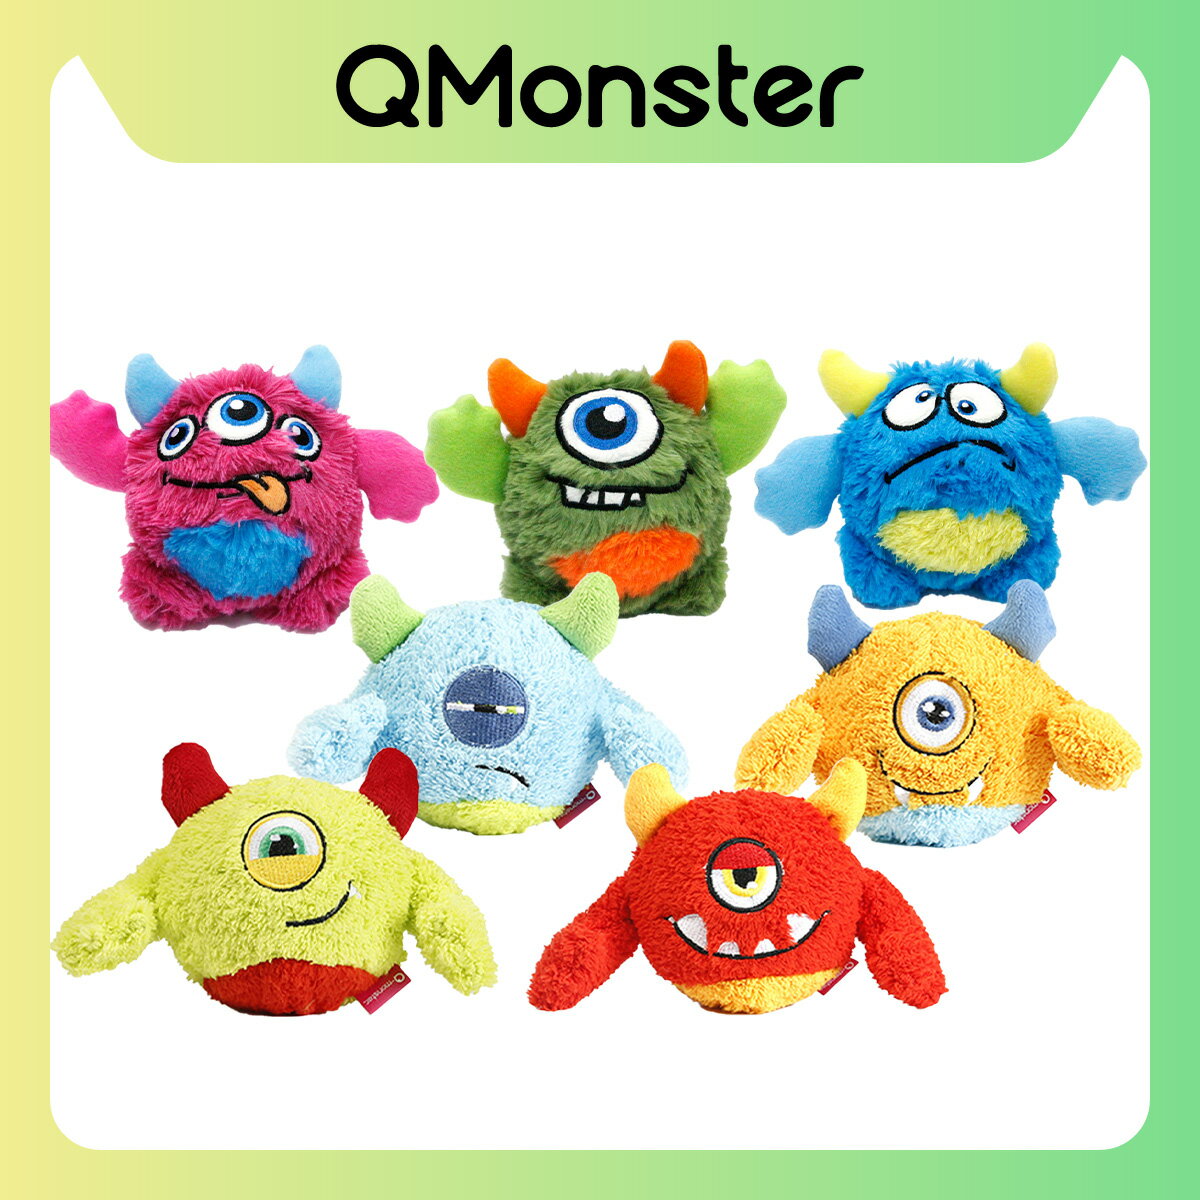 【Q-MONSTER】Q寶家族系列 狗玩具 發聲玩具 寵物玩具 毛絨玩具 狗狗玩具 Q MONSTER